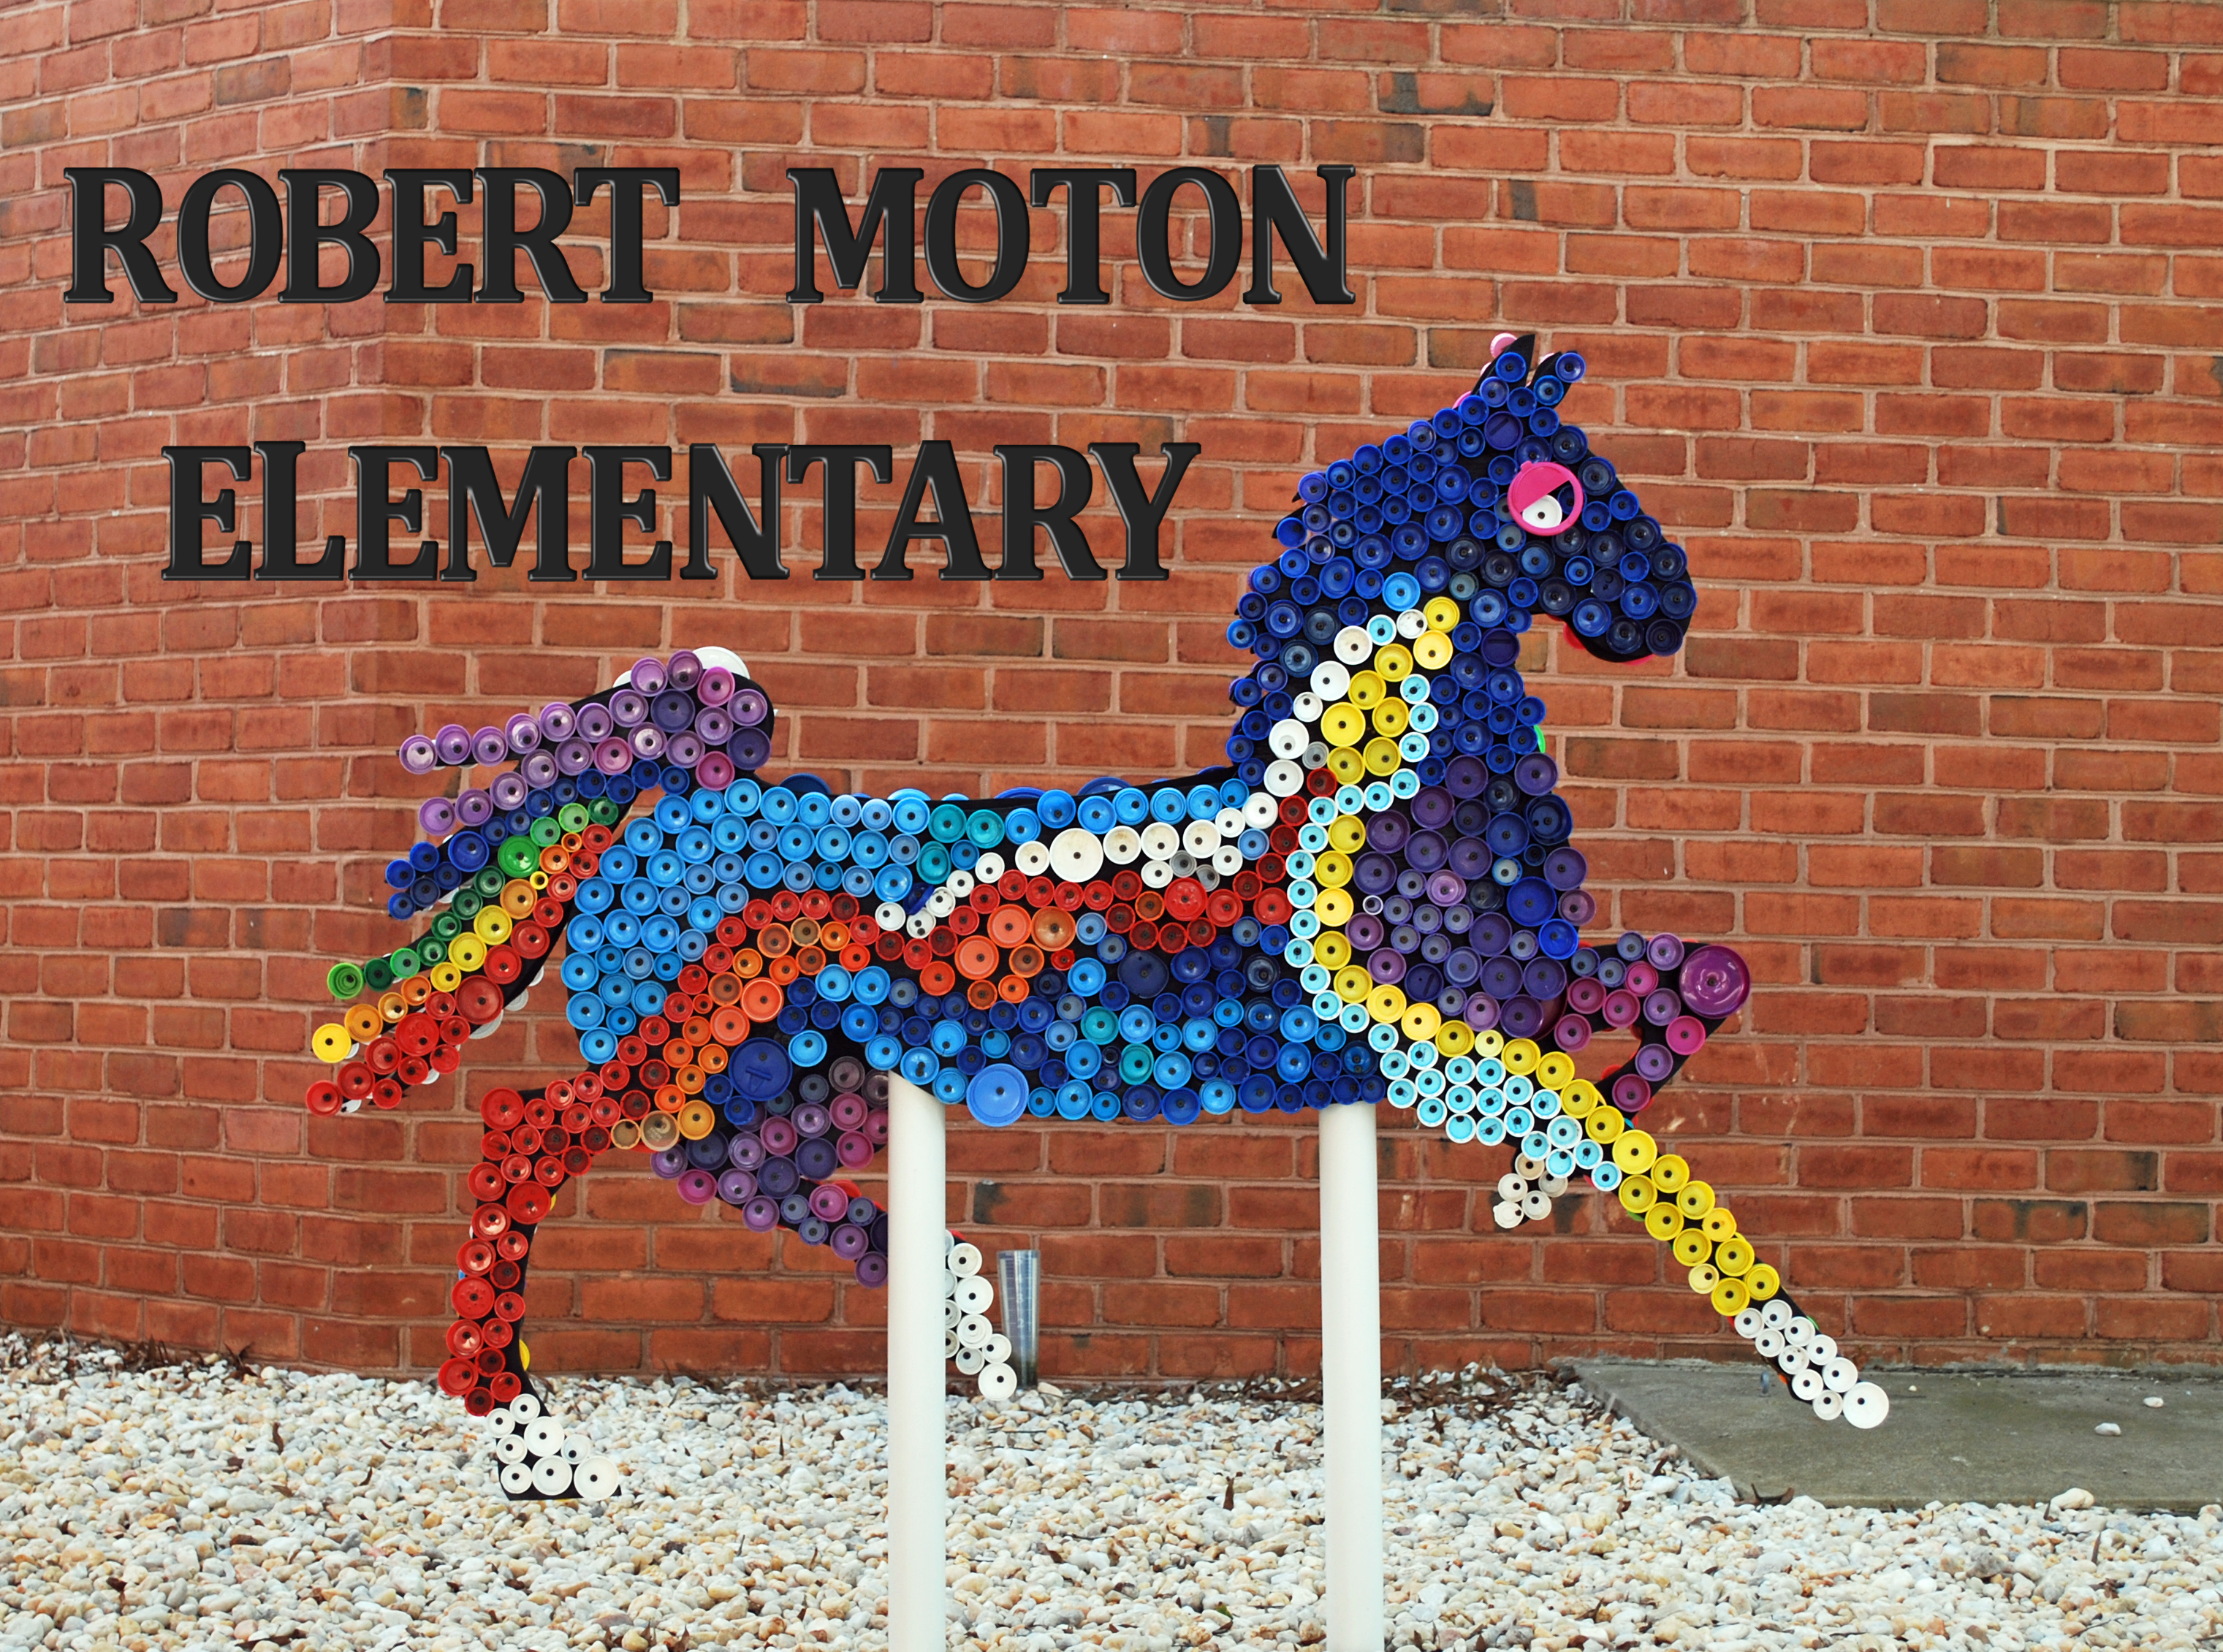 Robert Moton Elementary